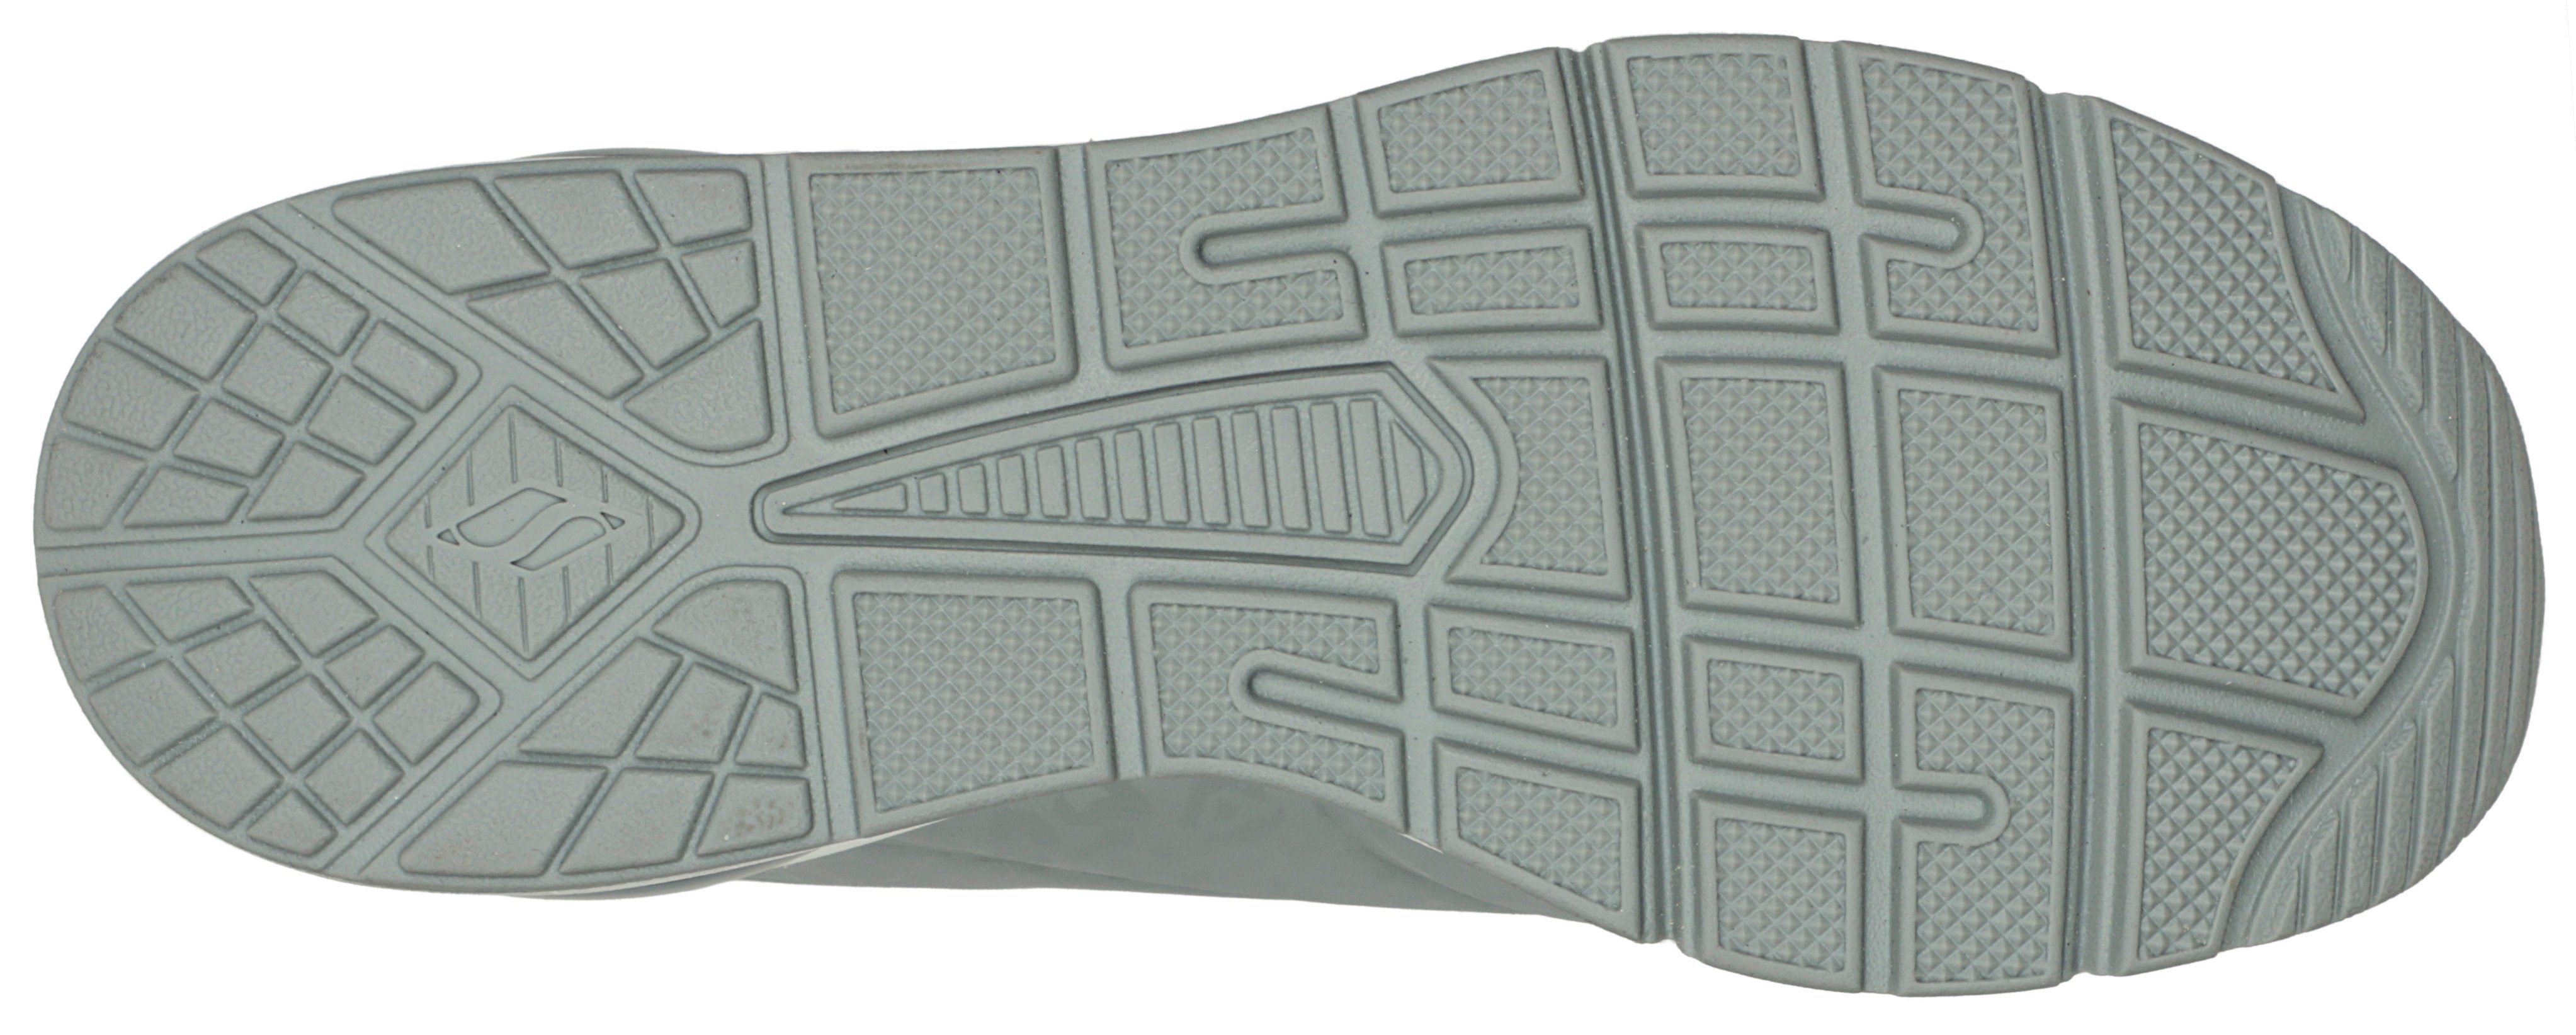 IN-KAT-NEATO UNO Sneaker 2 grau Skech-Air-Luftkammernsohle - Skechers mit